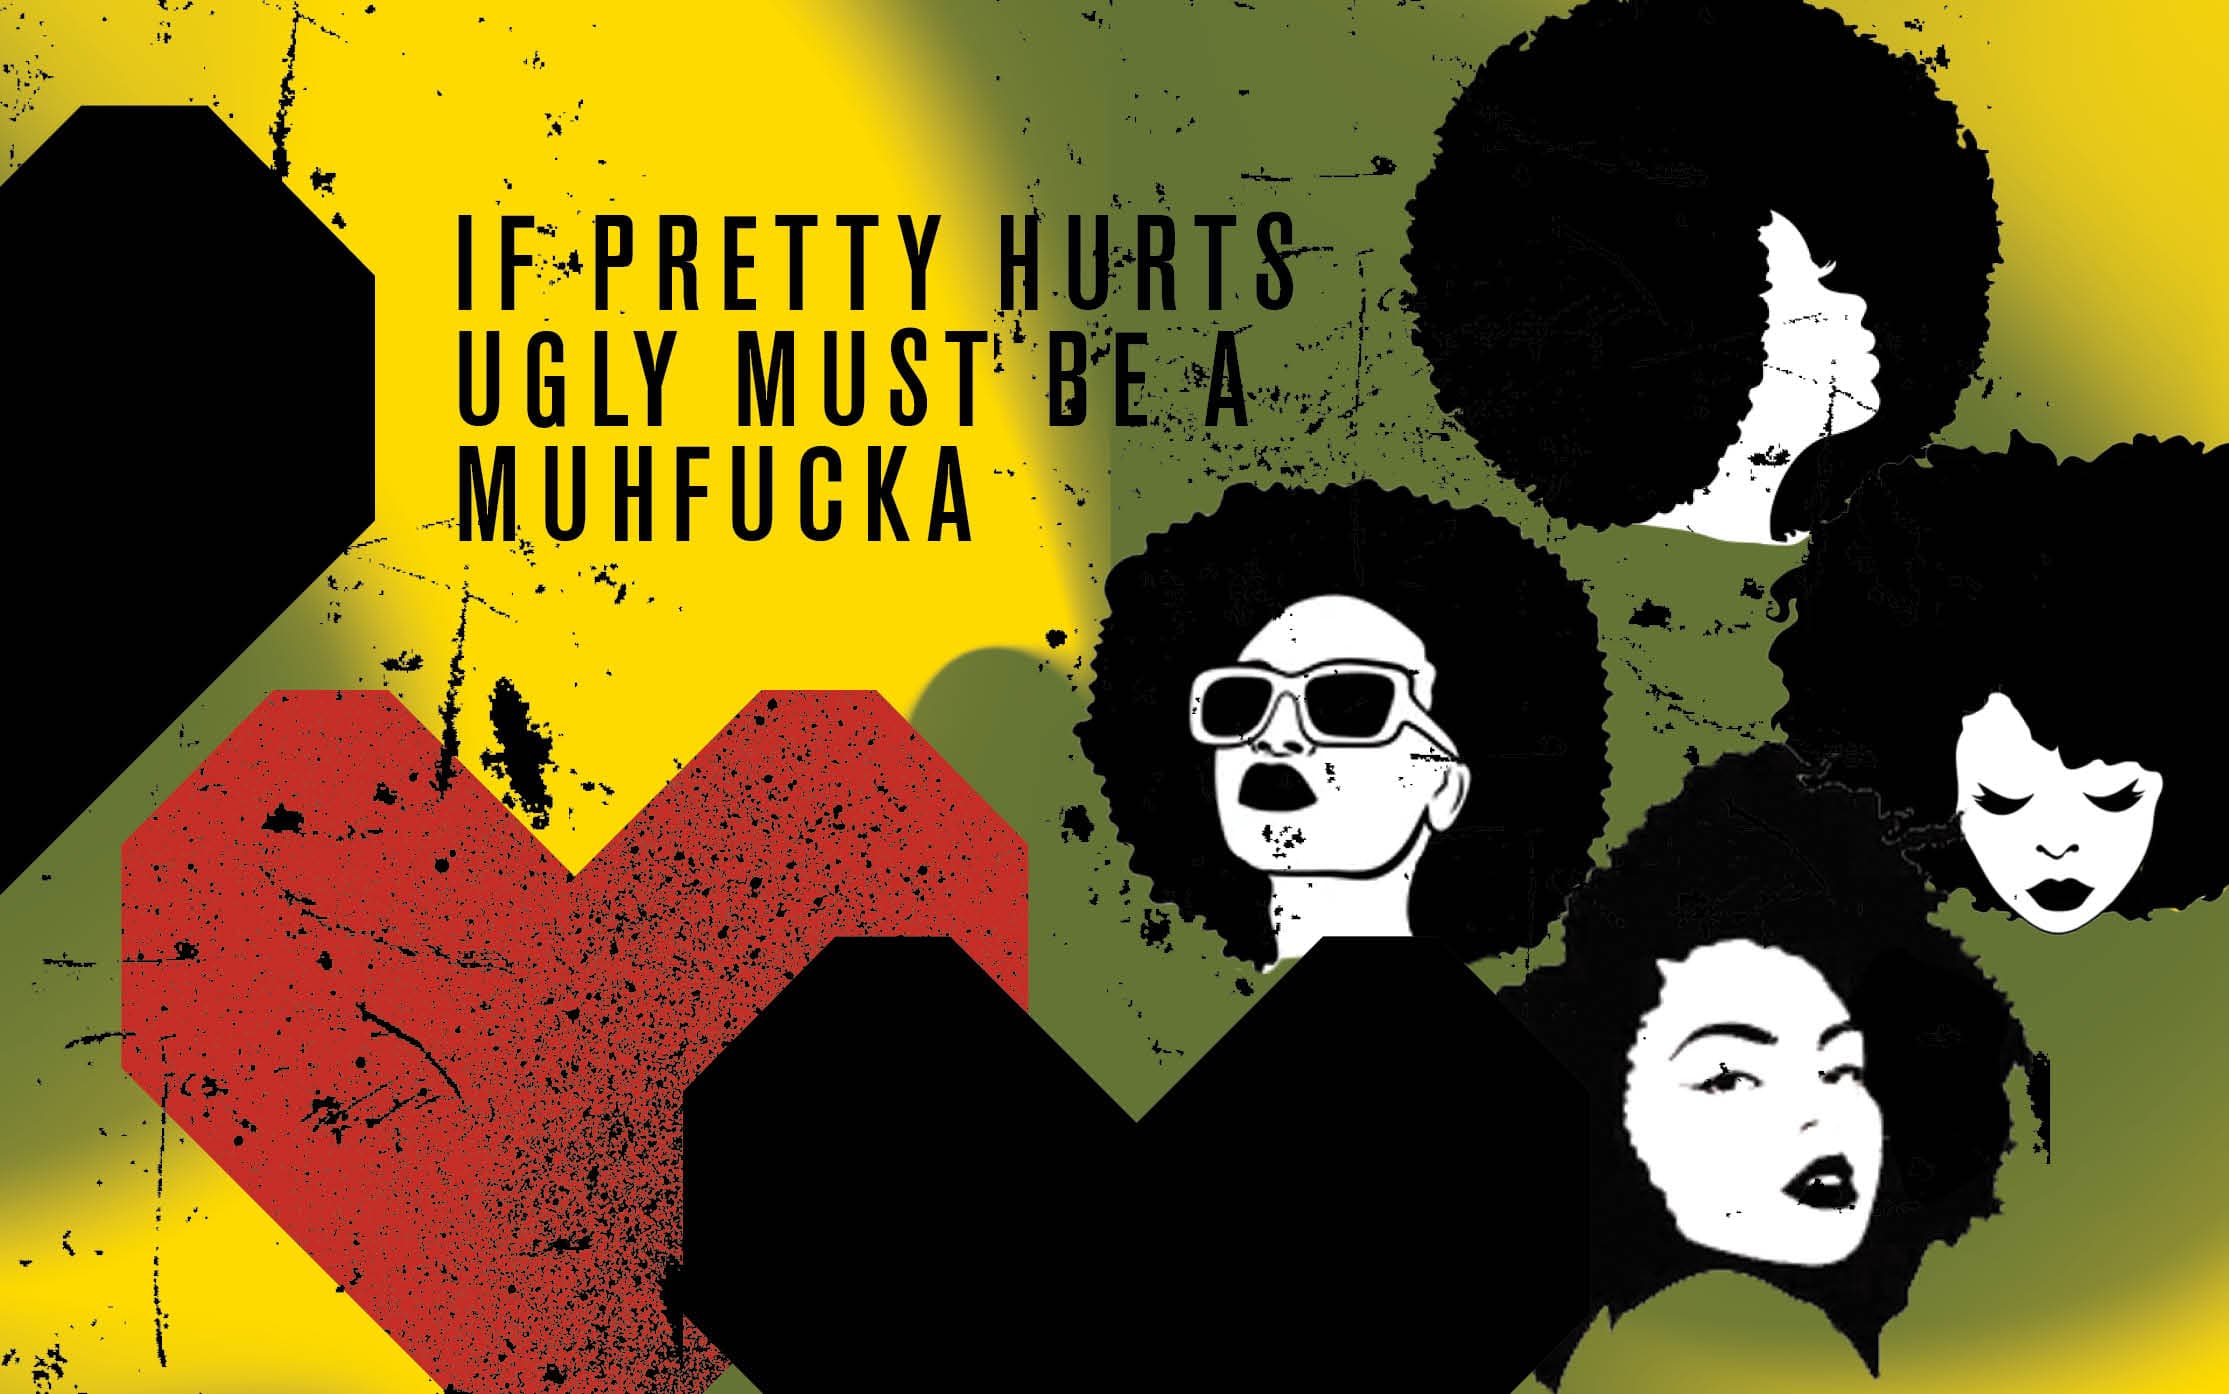 If Pretty Hurts